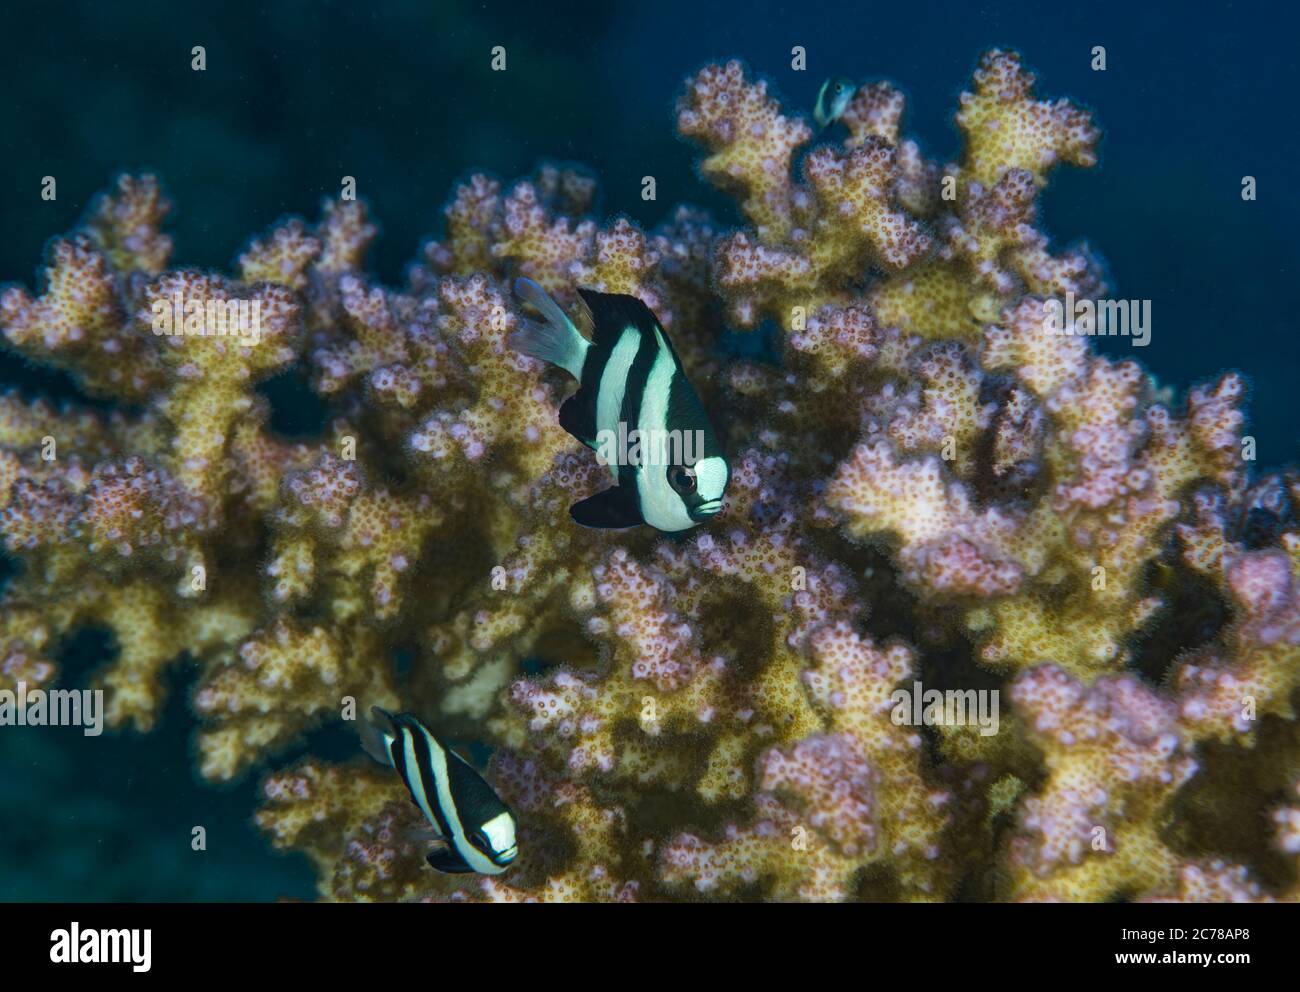 Humbug Damsels, Dascyllus aruanus, swimming above its hideaway, an agropora coral, Hamata, Red Sea, Egypt, Stock Photo